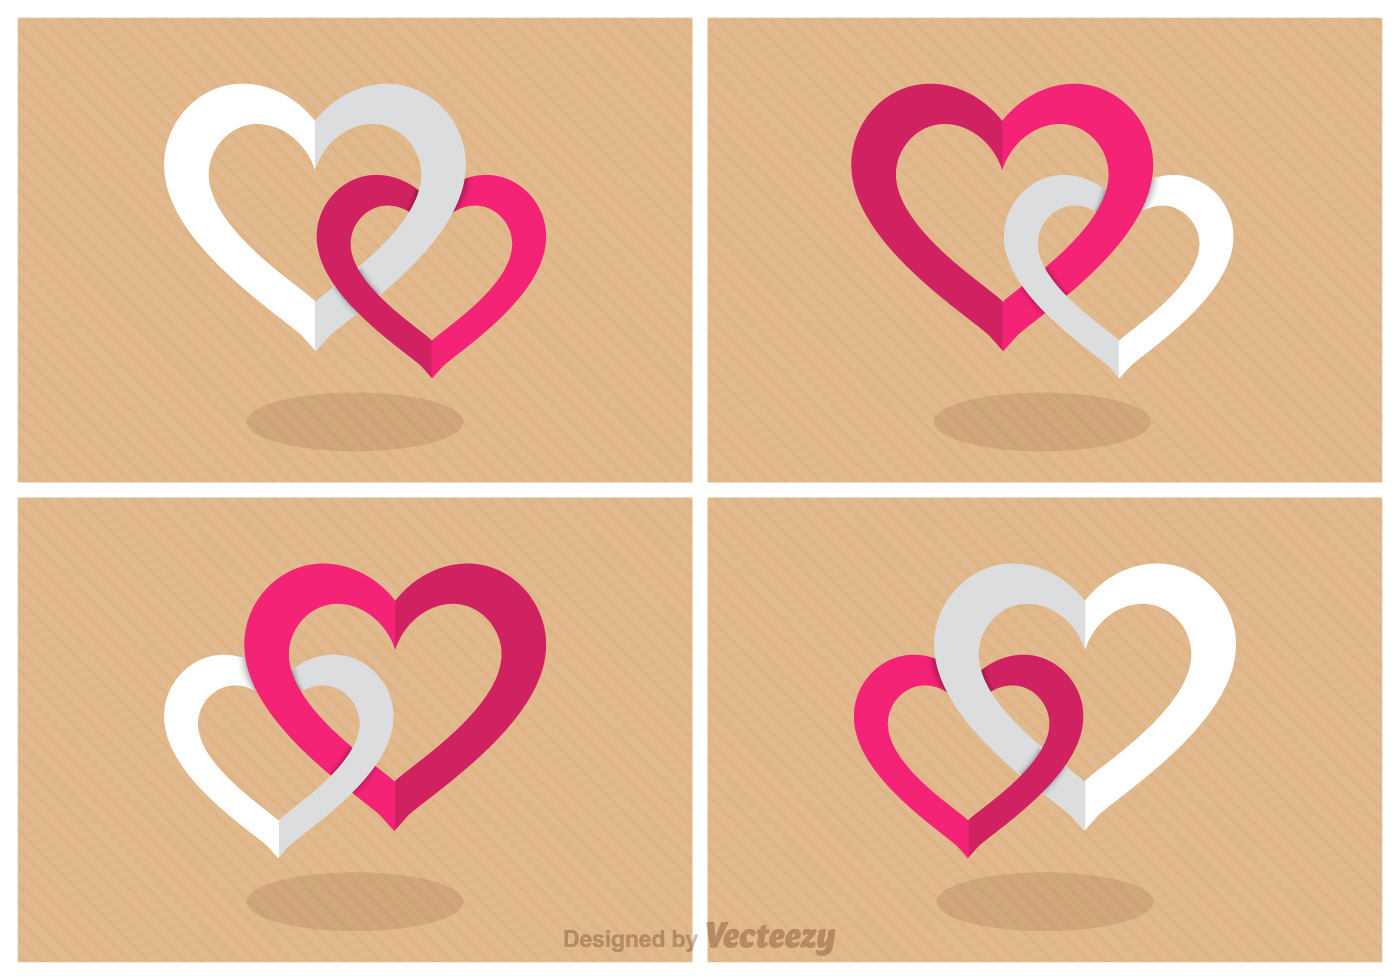 Flat Combined Hearts Vector - Download Free Vector Art ...